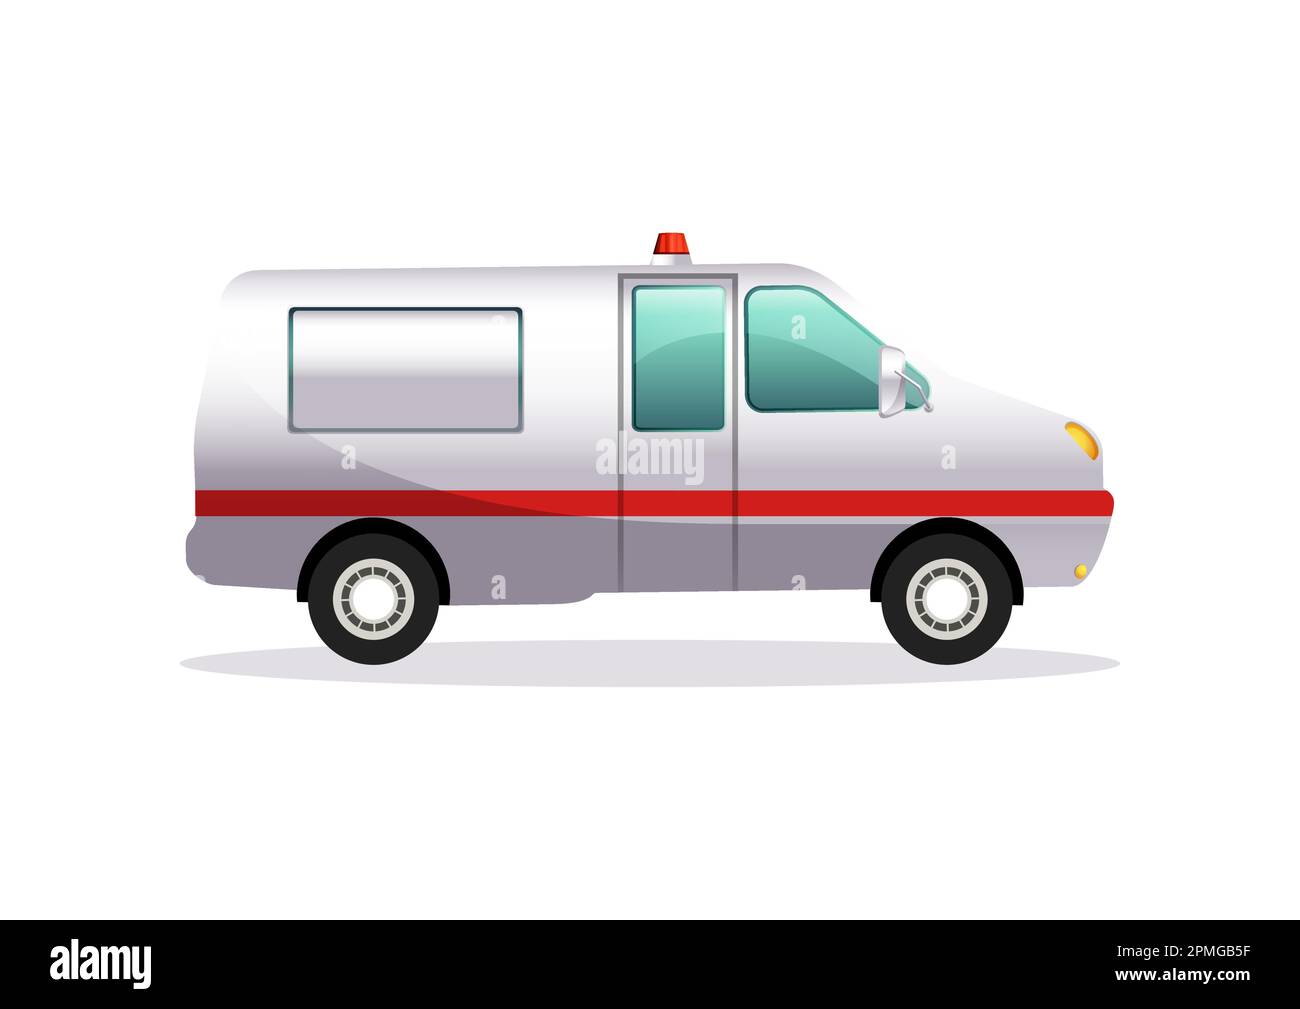 Ambulance Car In Flat Style Vector Stock Vector